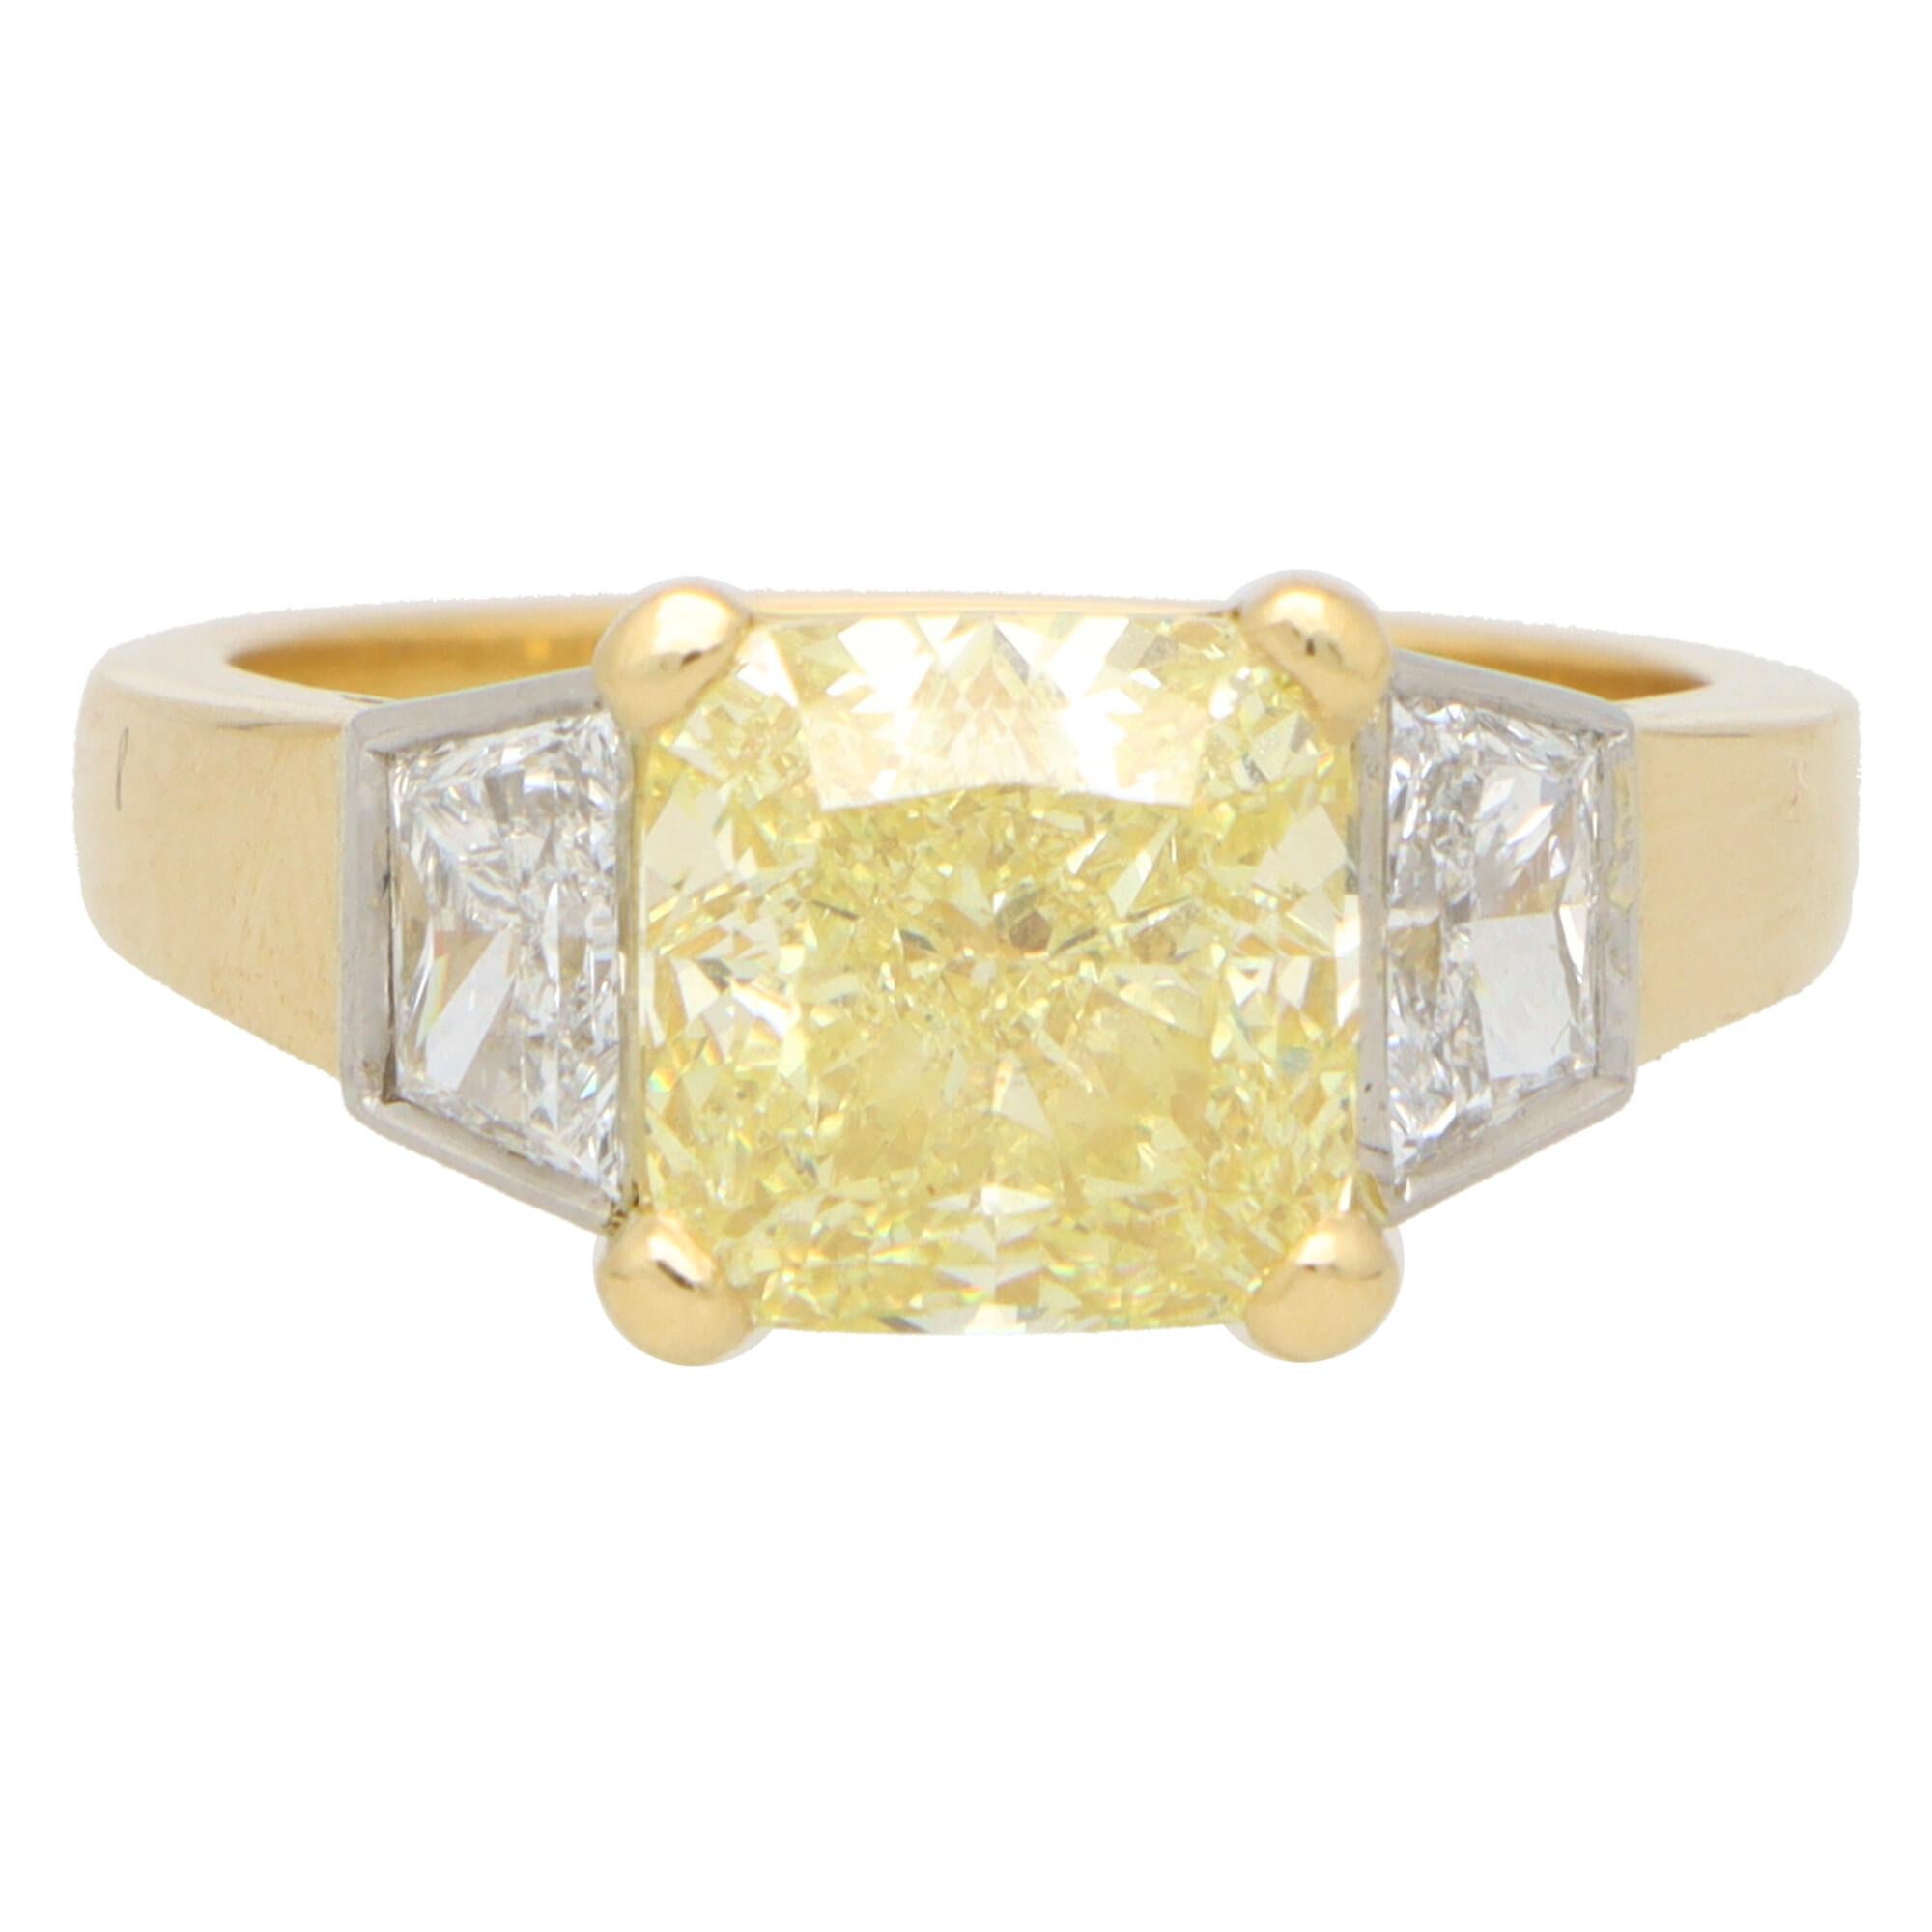 Cushion Cut GIA Certified 3.51ct Fancy Yellow Diamond Three Stone Ring Set in 18k Gold